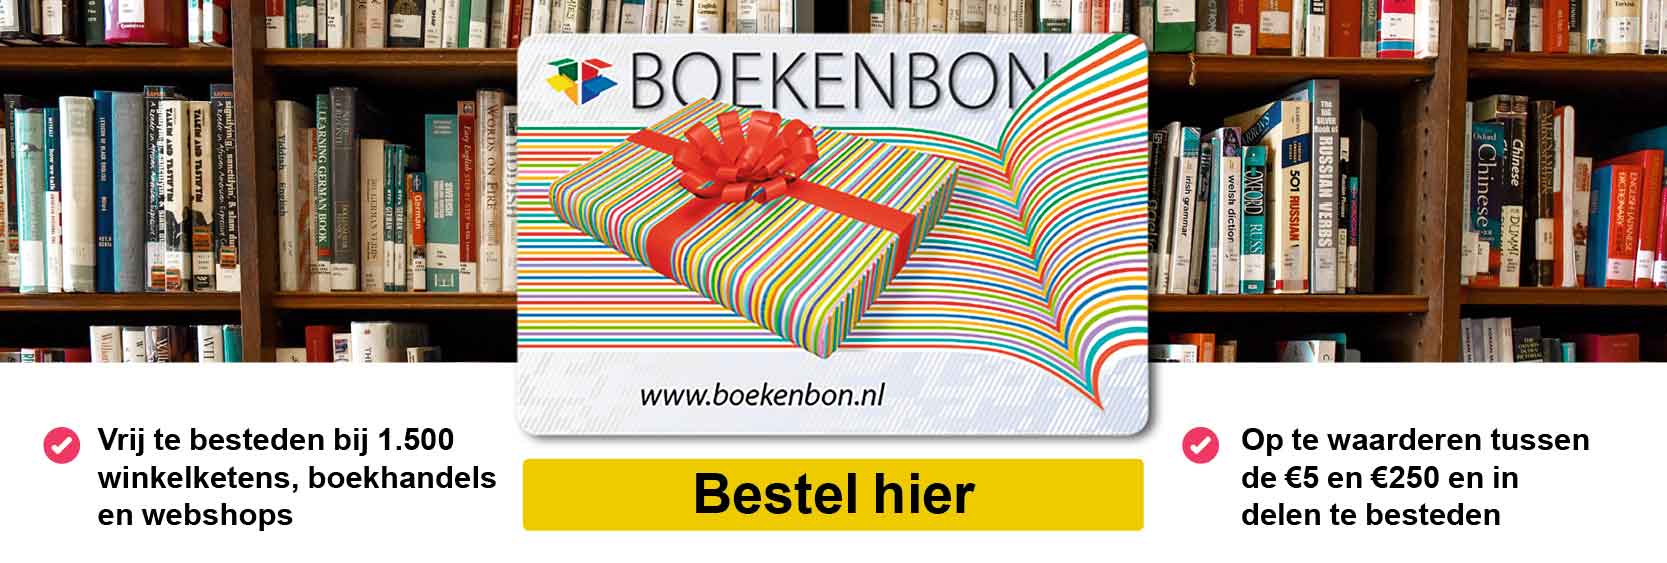 Boekenbon_banner_def